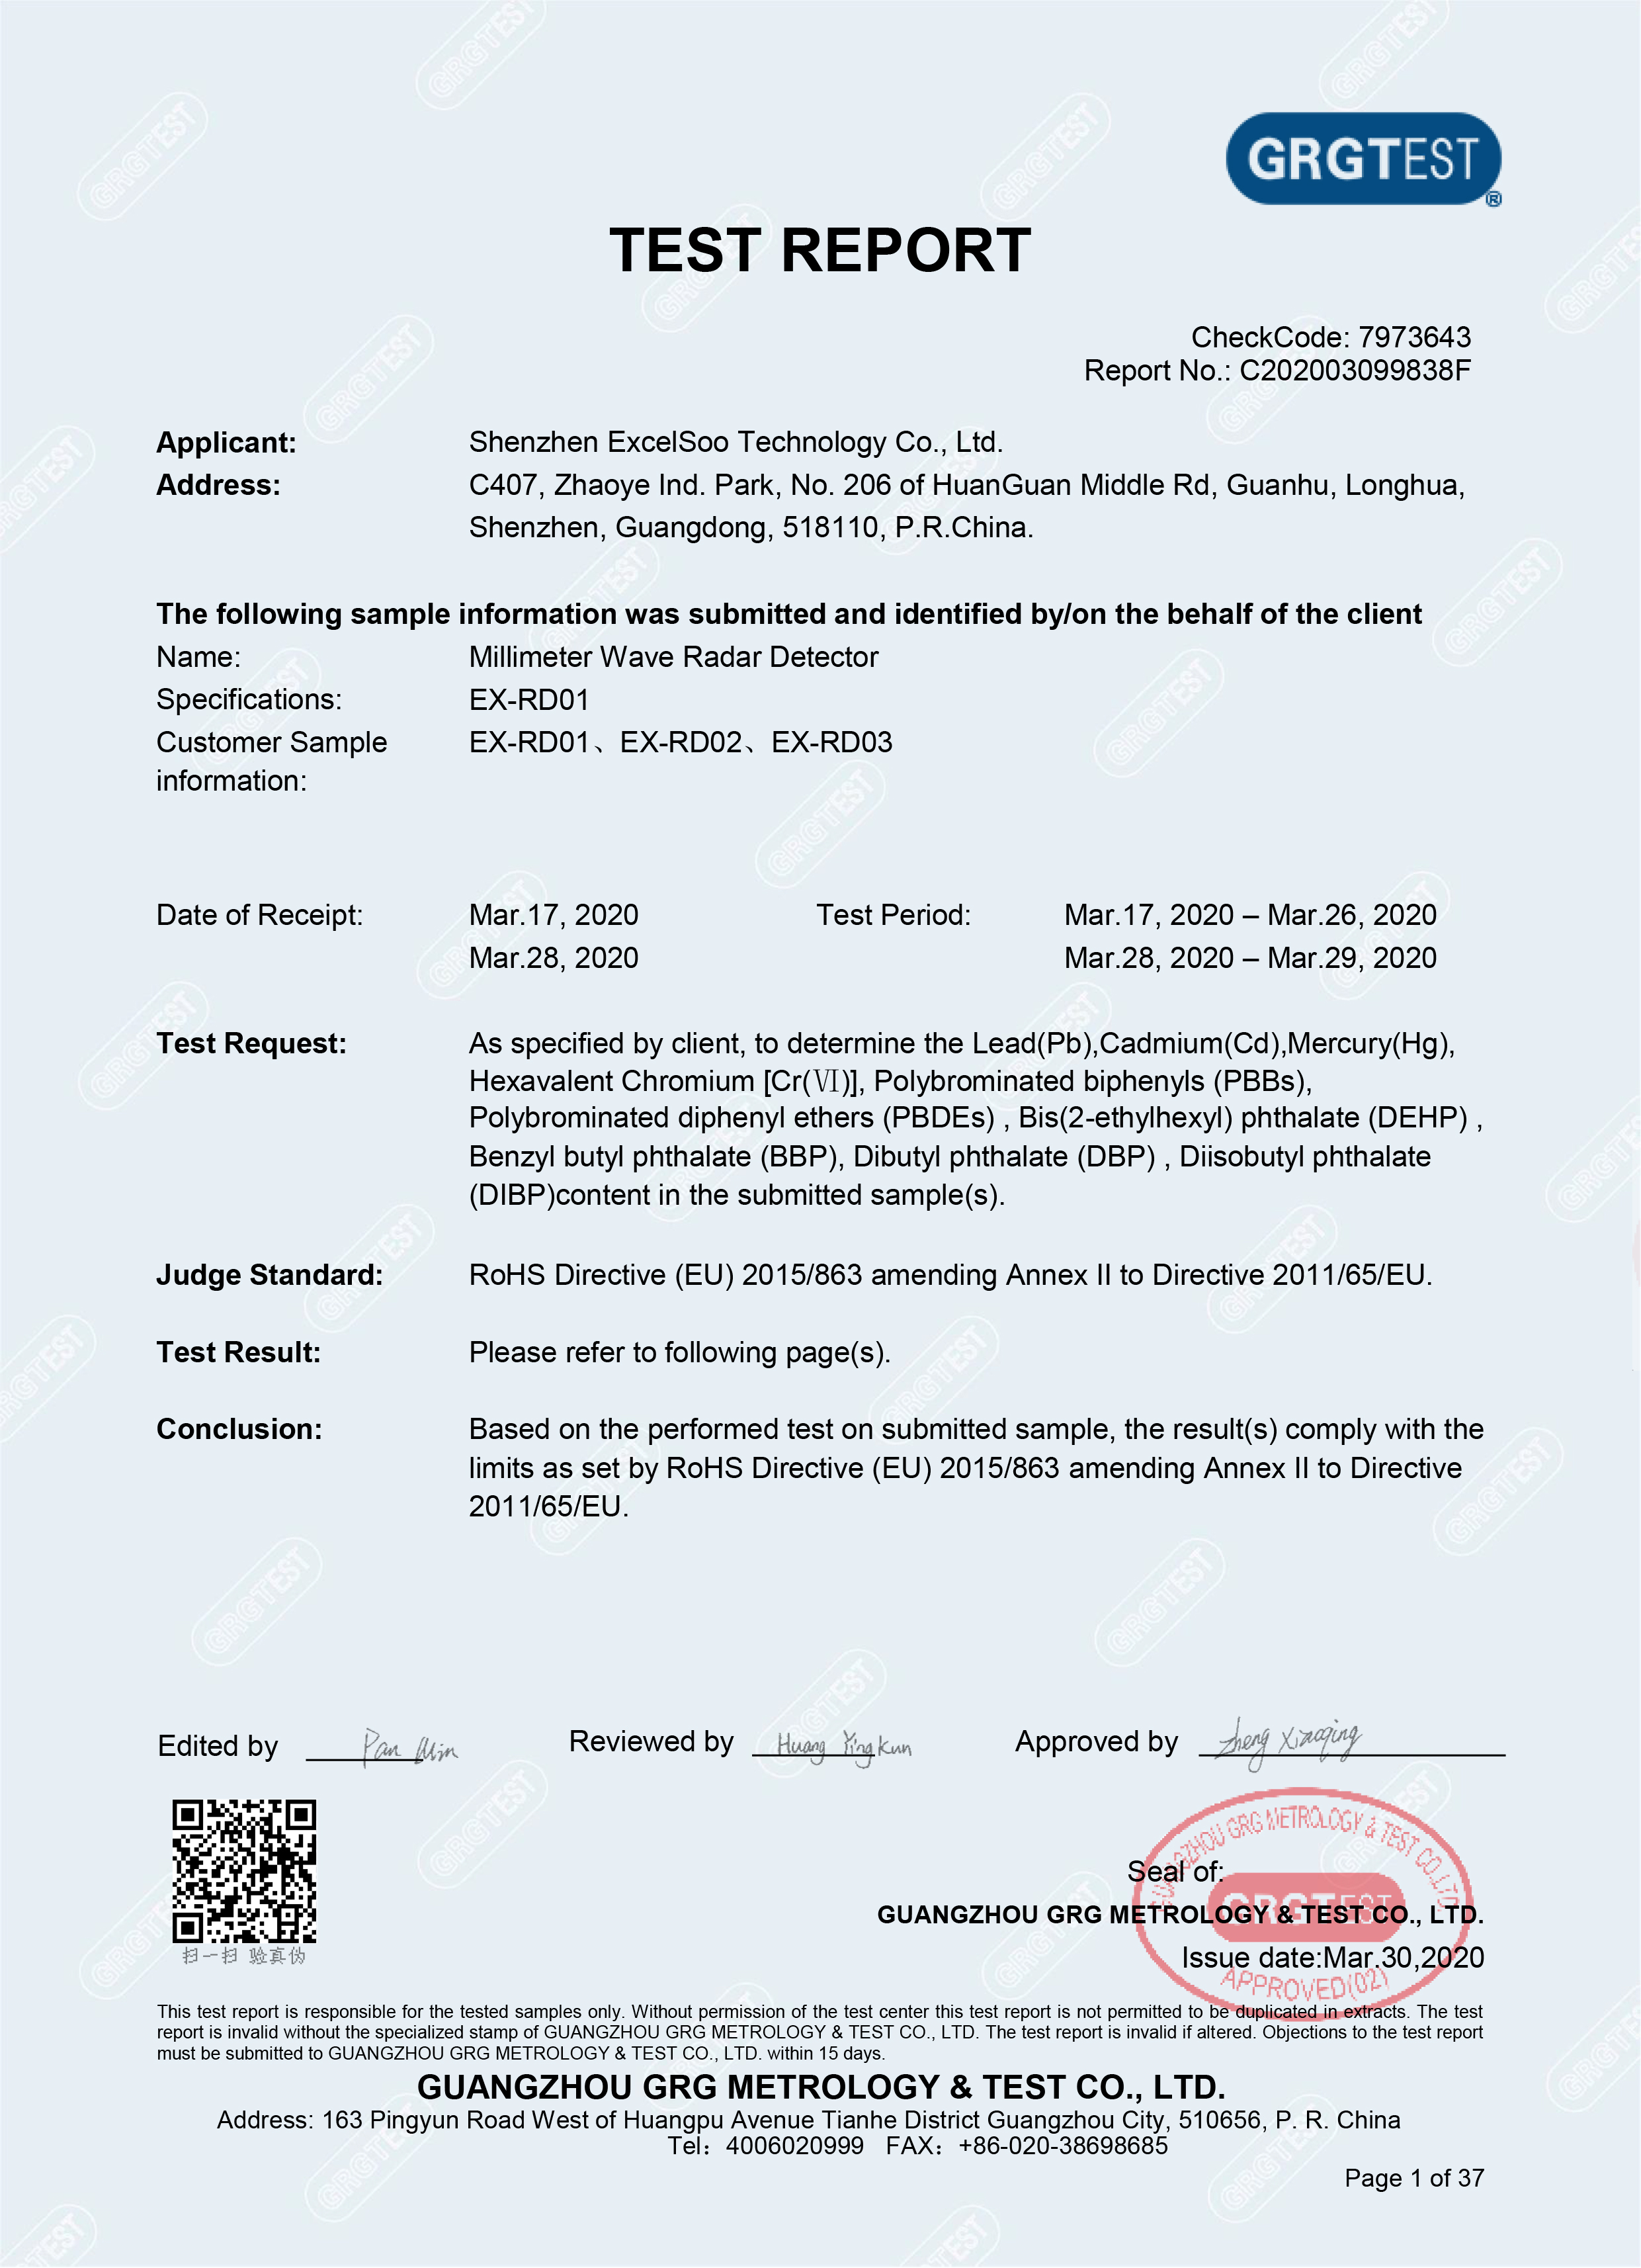 RoHS Certificate of the Excelsoo Radar Detector